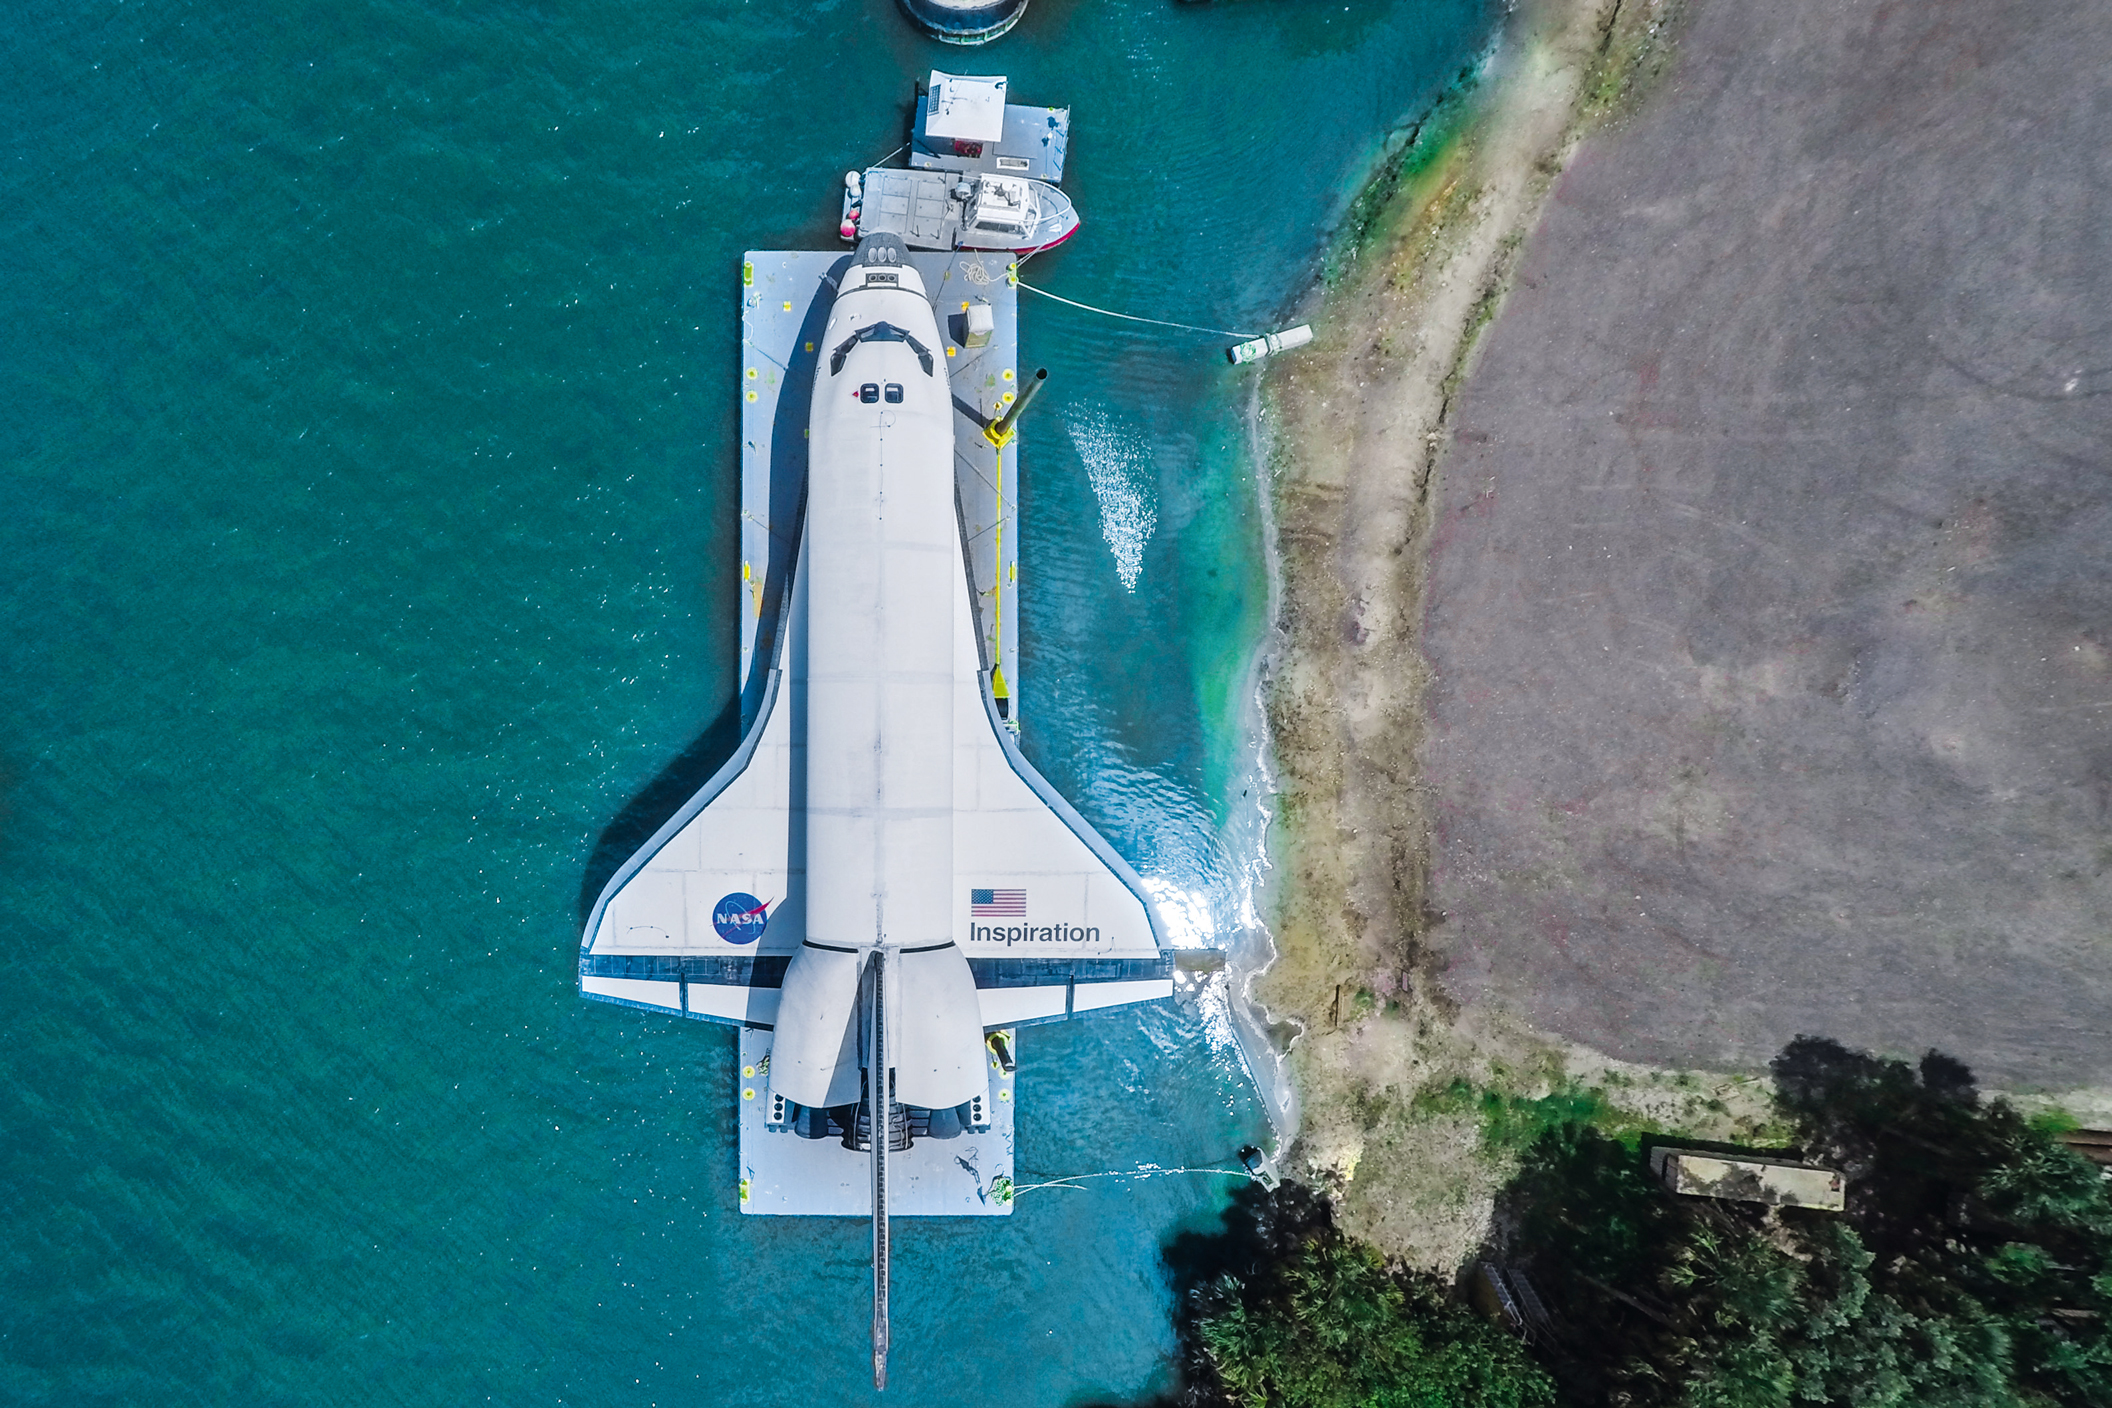 The Inspiration space shuttle being transported in Merritt Island, Flo. Taken from 59 feet.